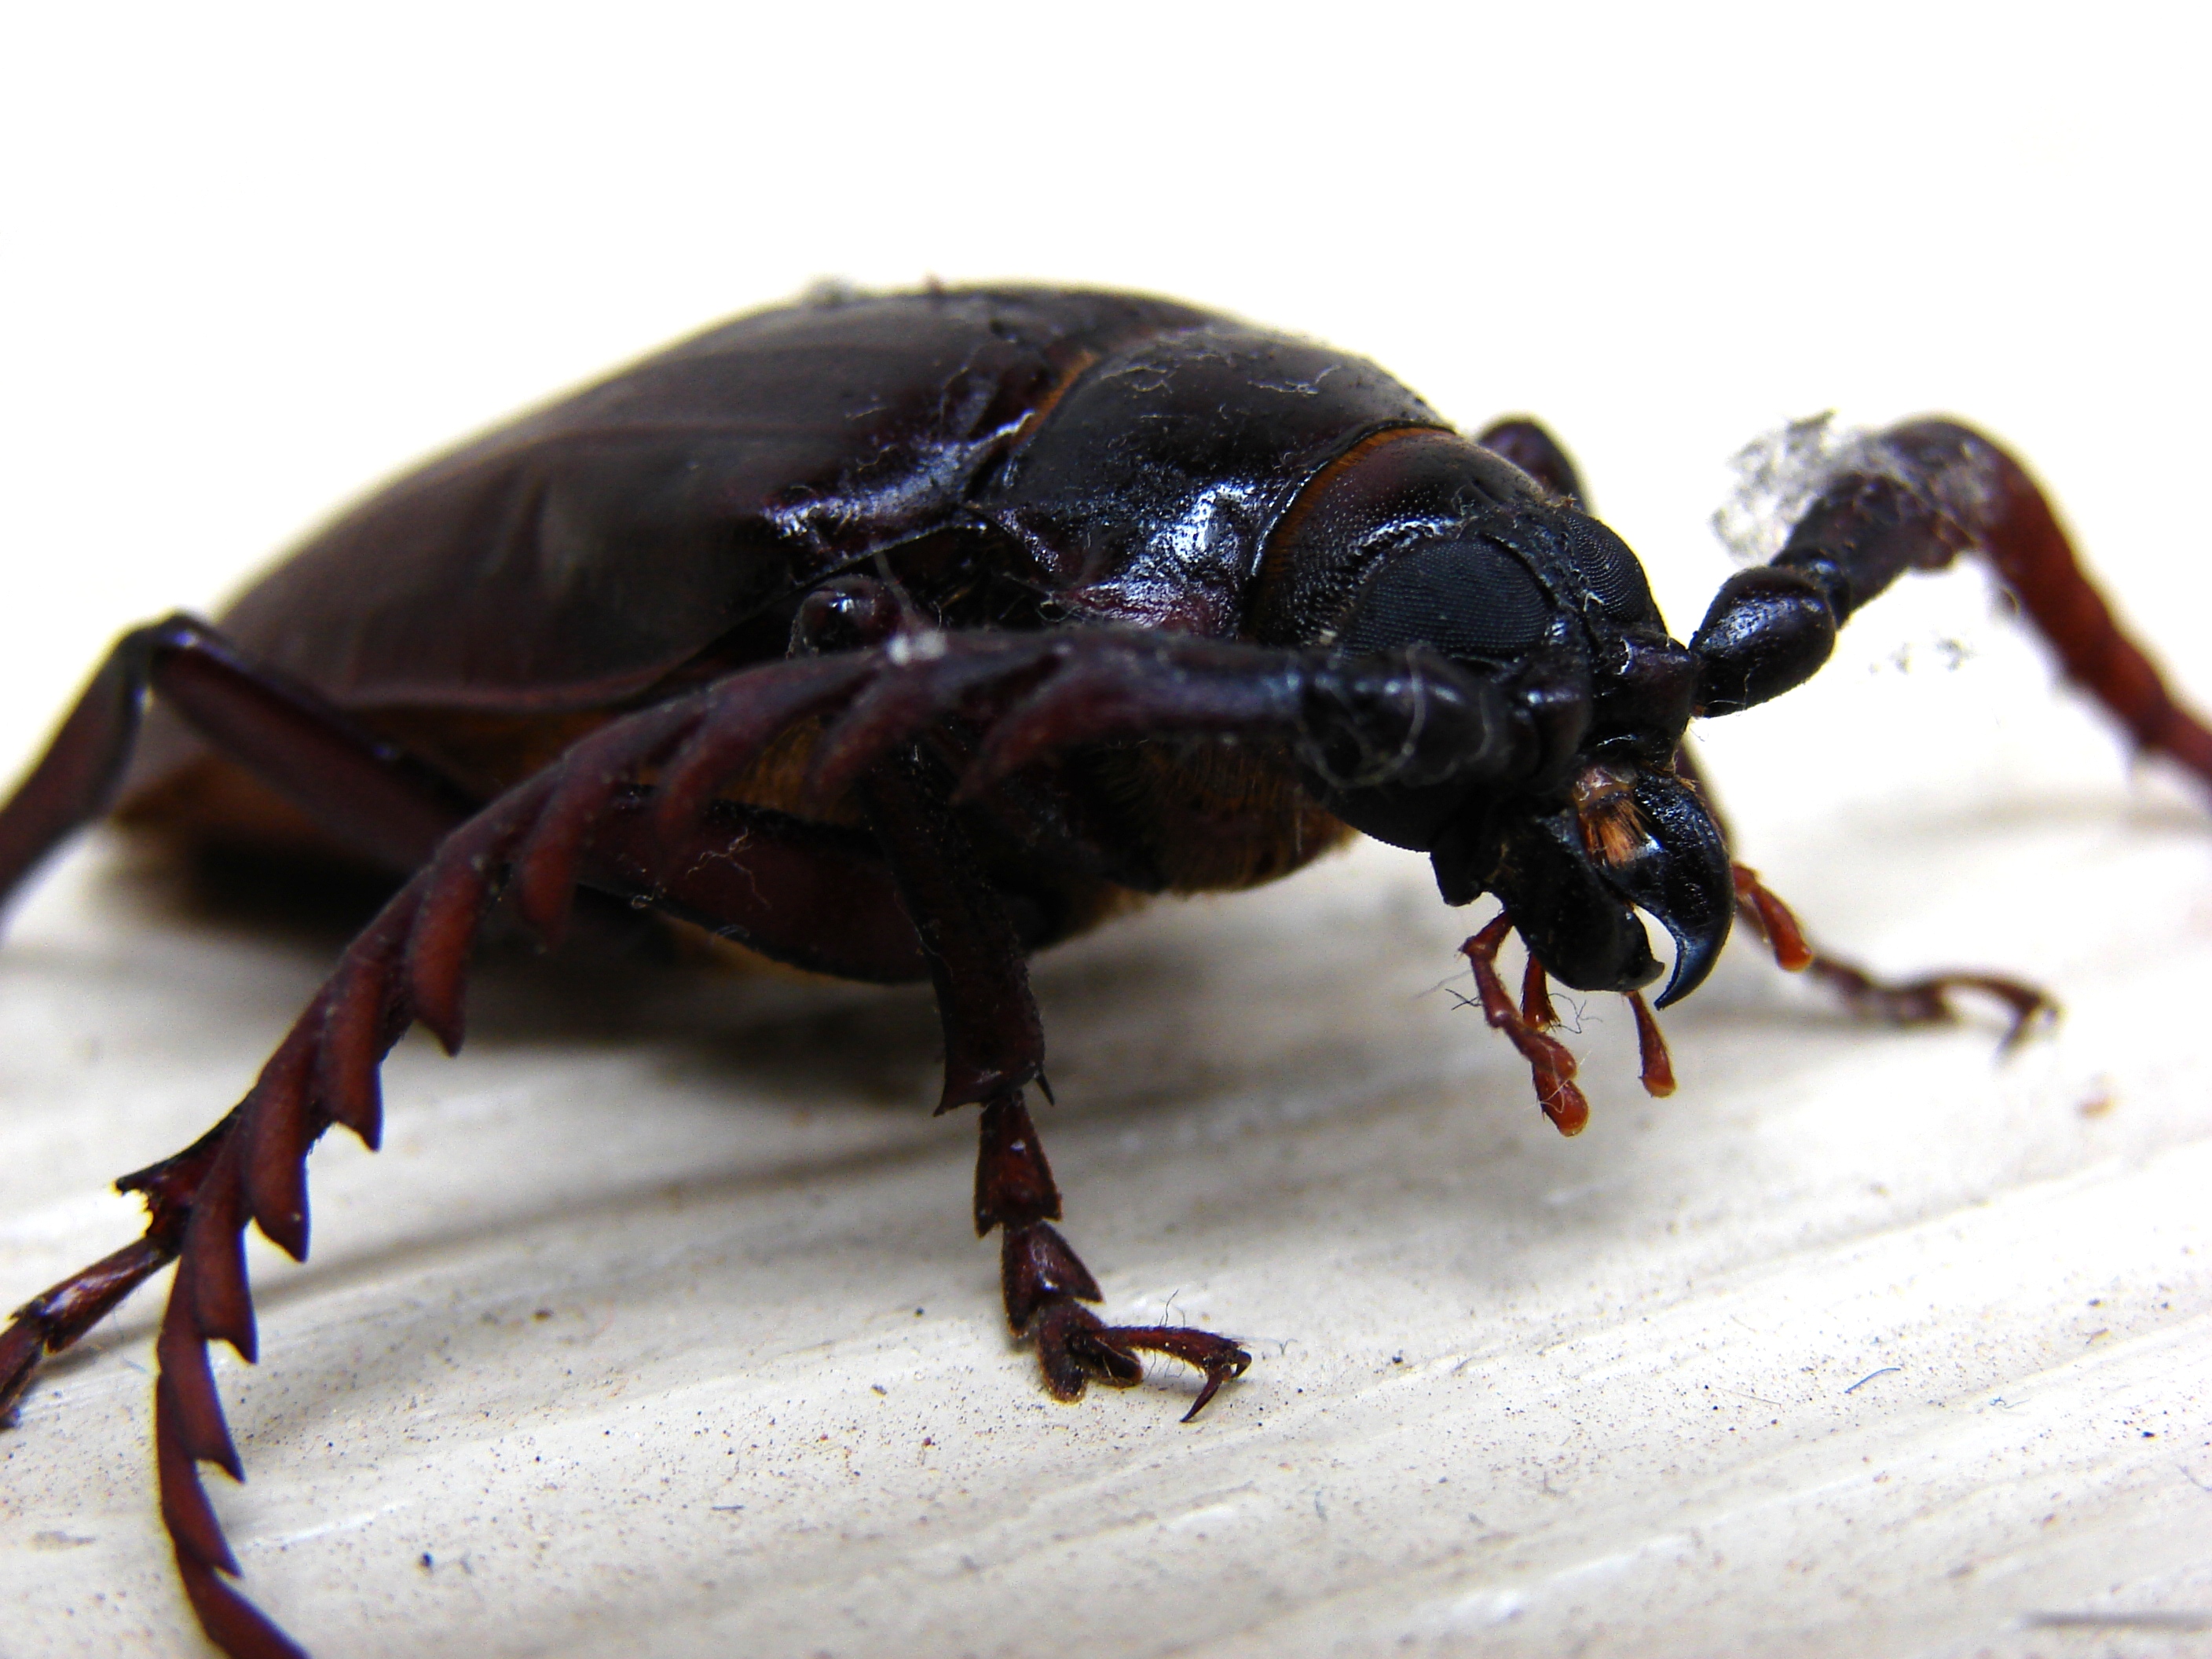 California prionus beetle photo